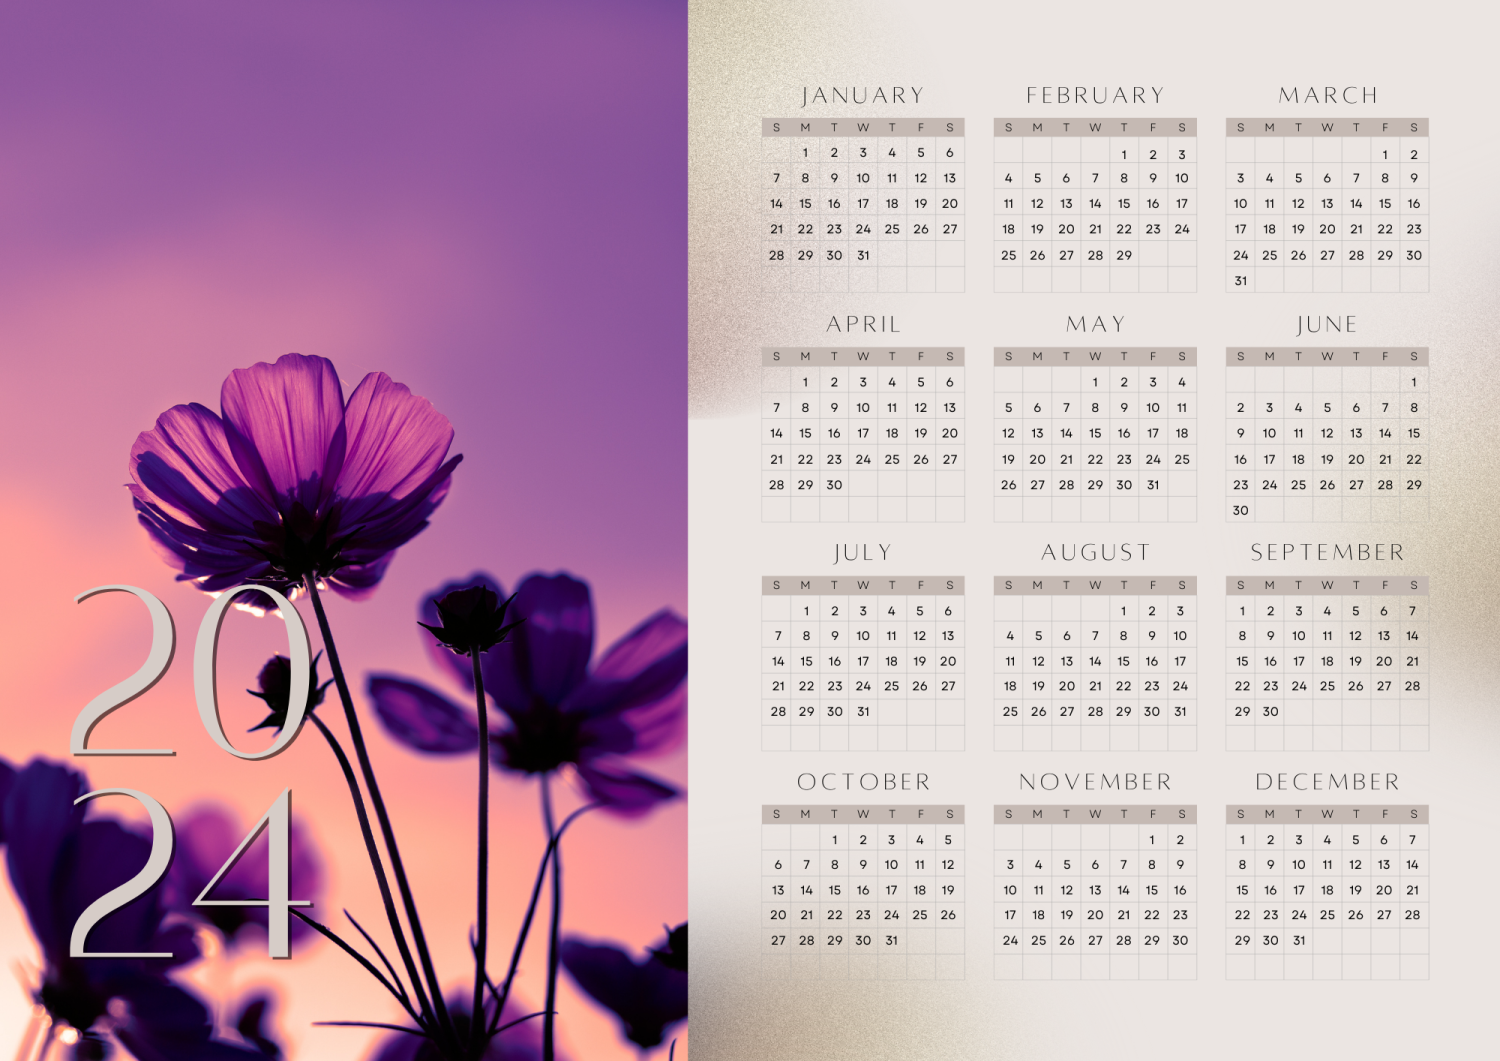 Calendars for you